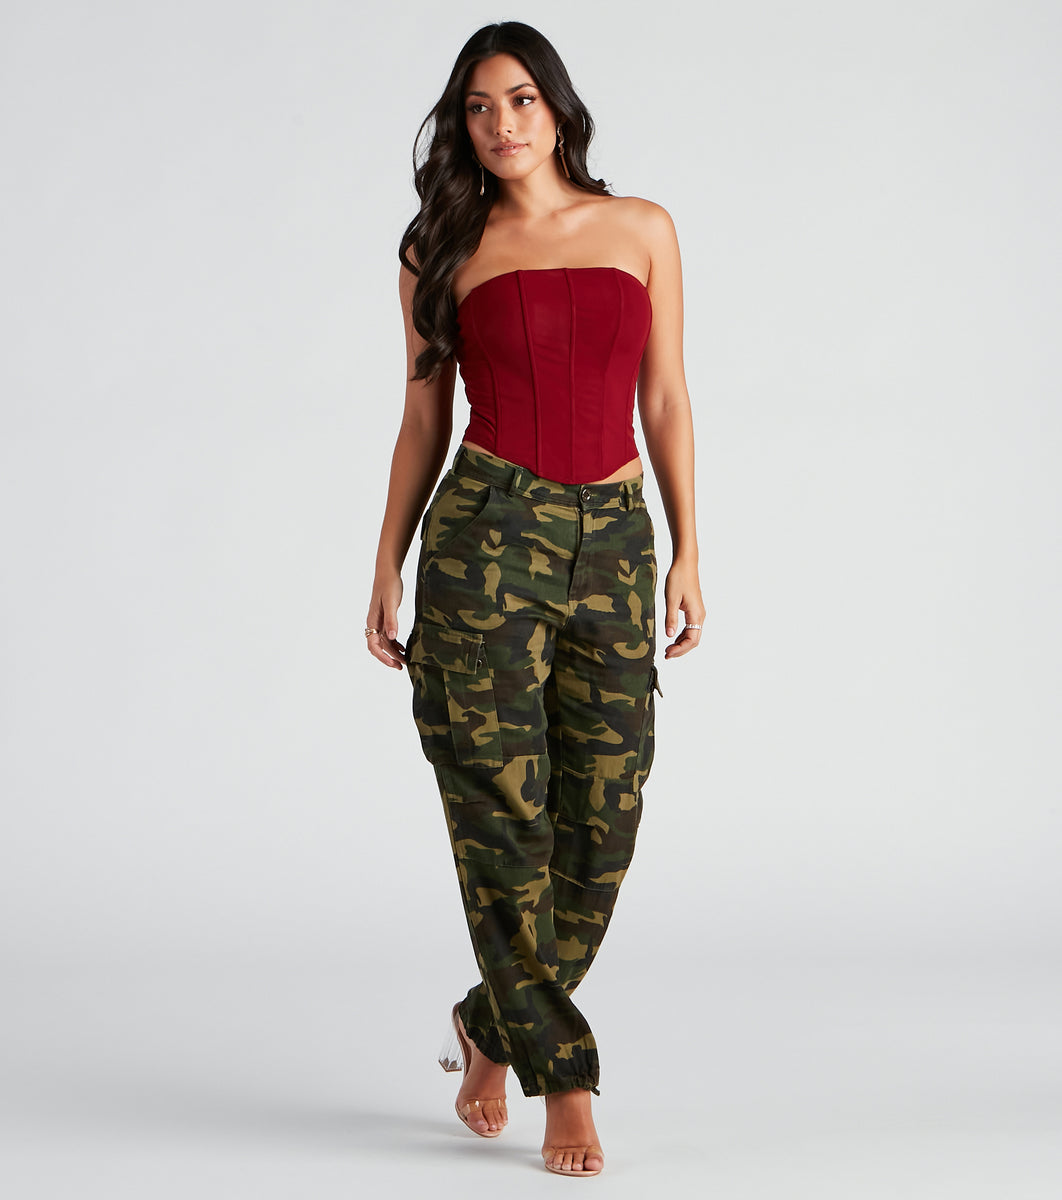 Rothco Military Style Desert Tan Women's Capri Pants, Size: 15/16